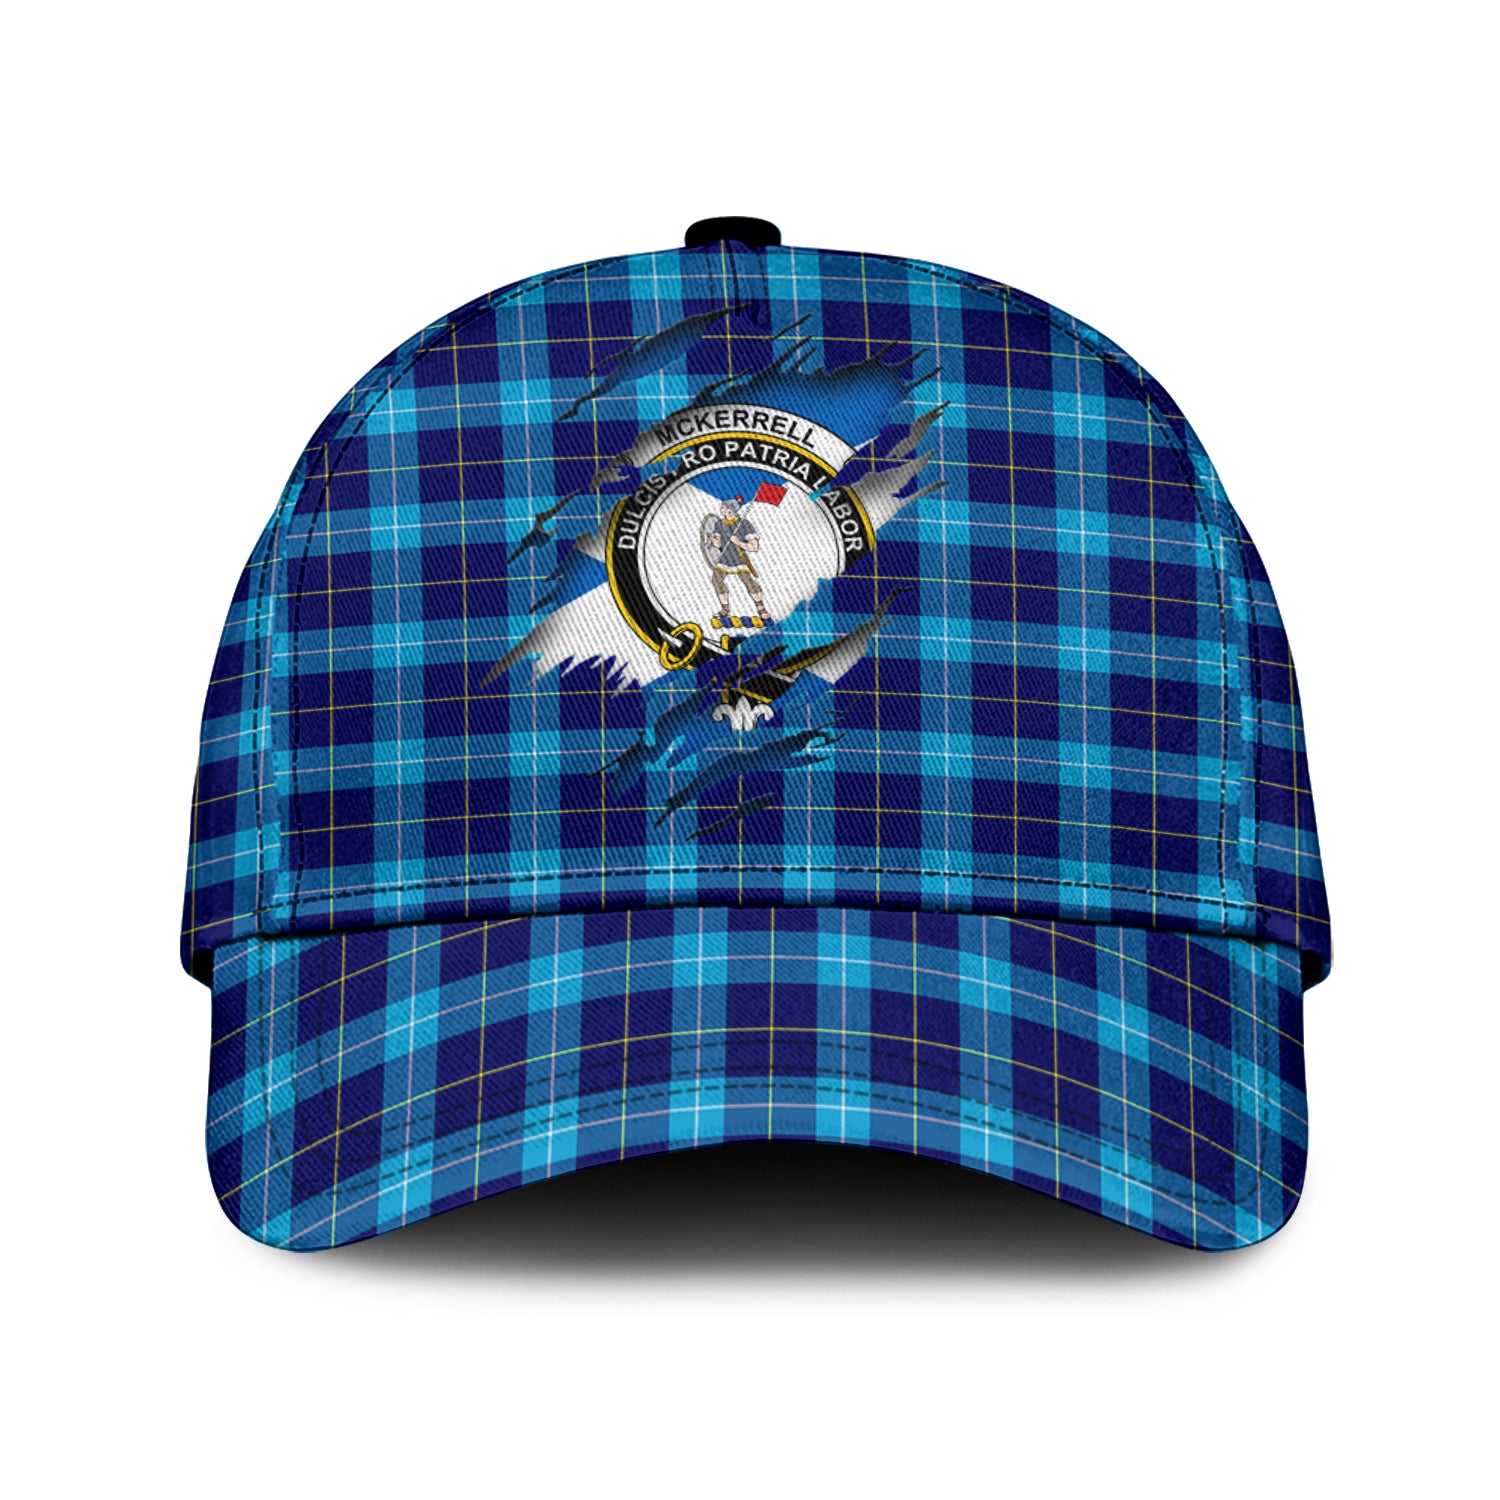 mckerrell-tartan-plaid-cap-family-crest-in-me-style-tartan-baseball-cap